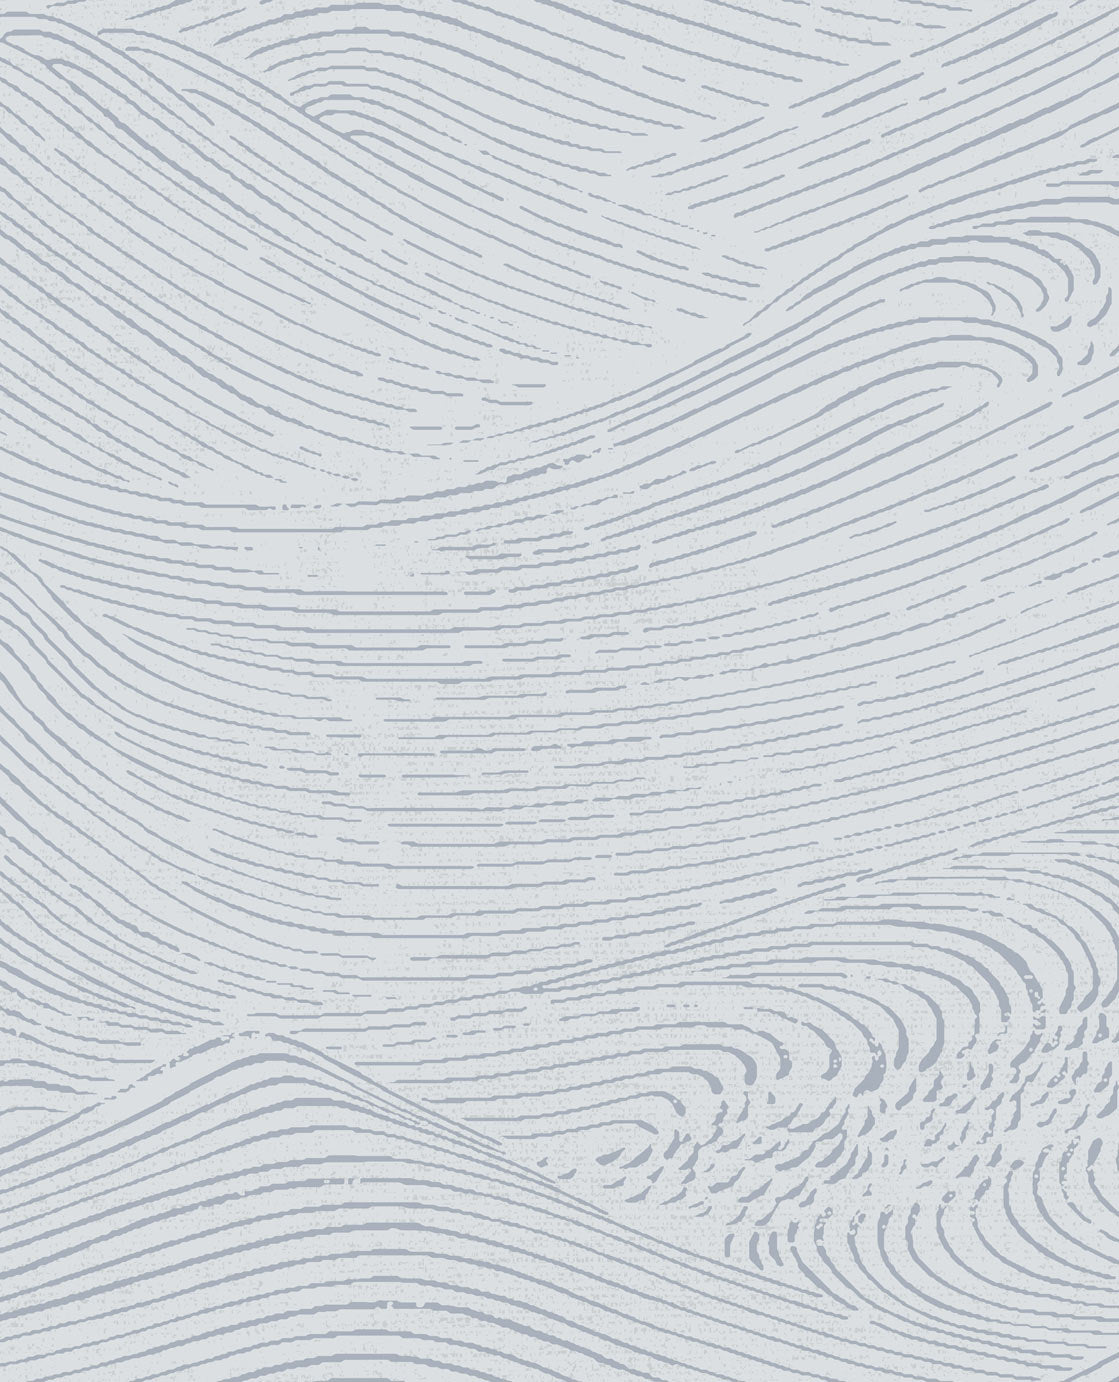 Enso Japanese Wave wallpaper